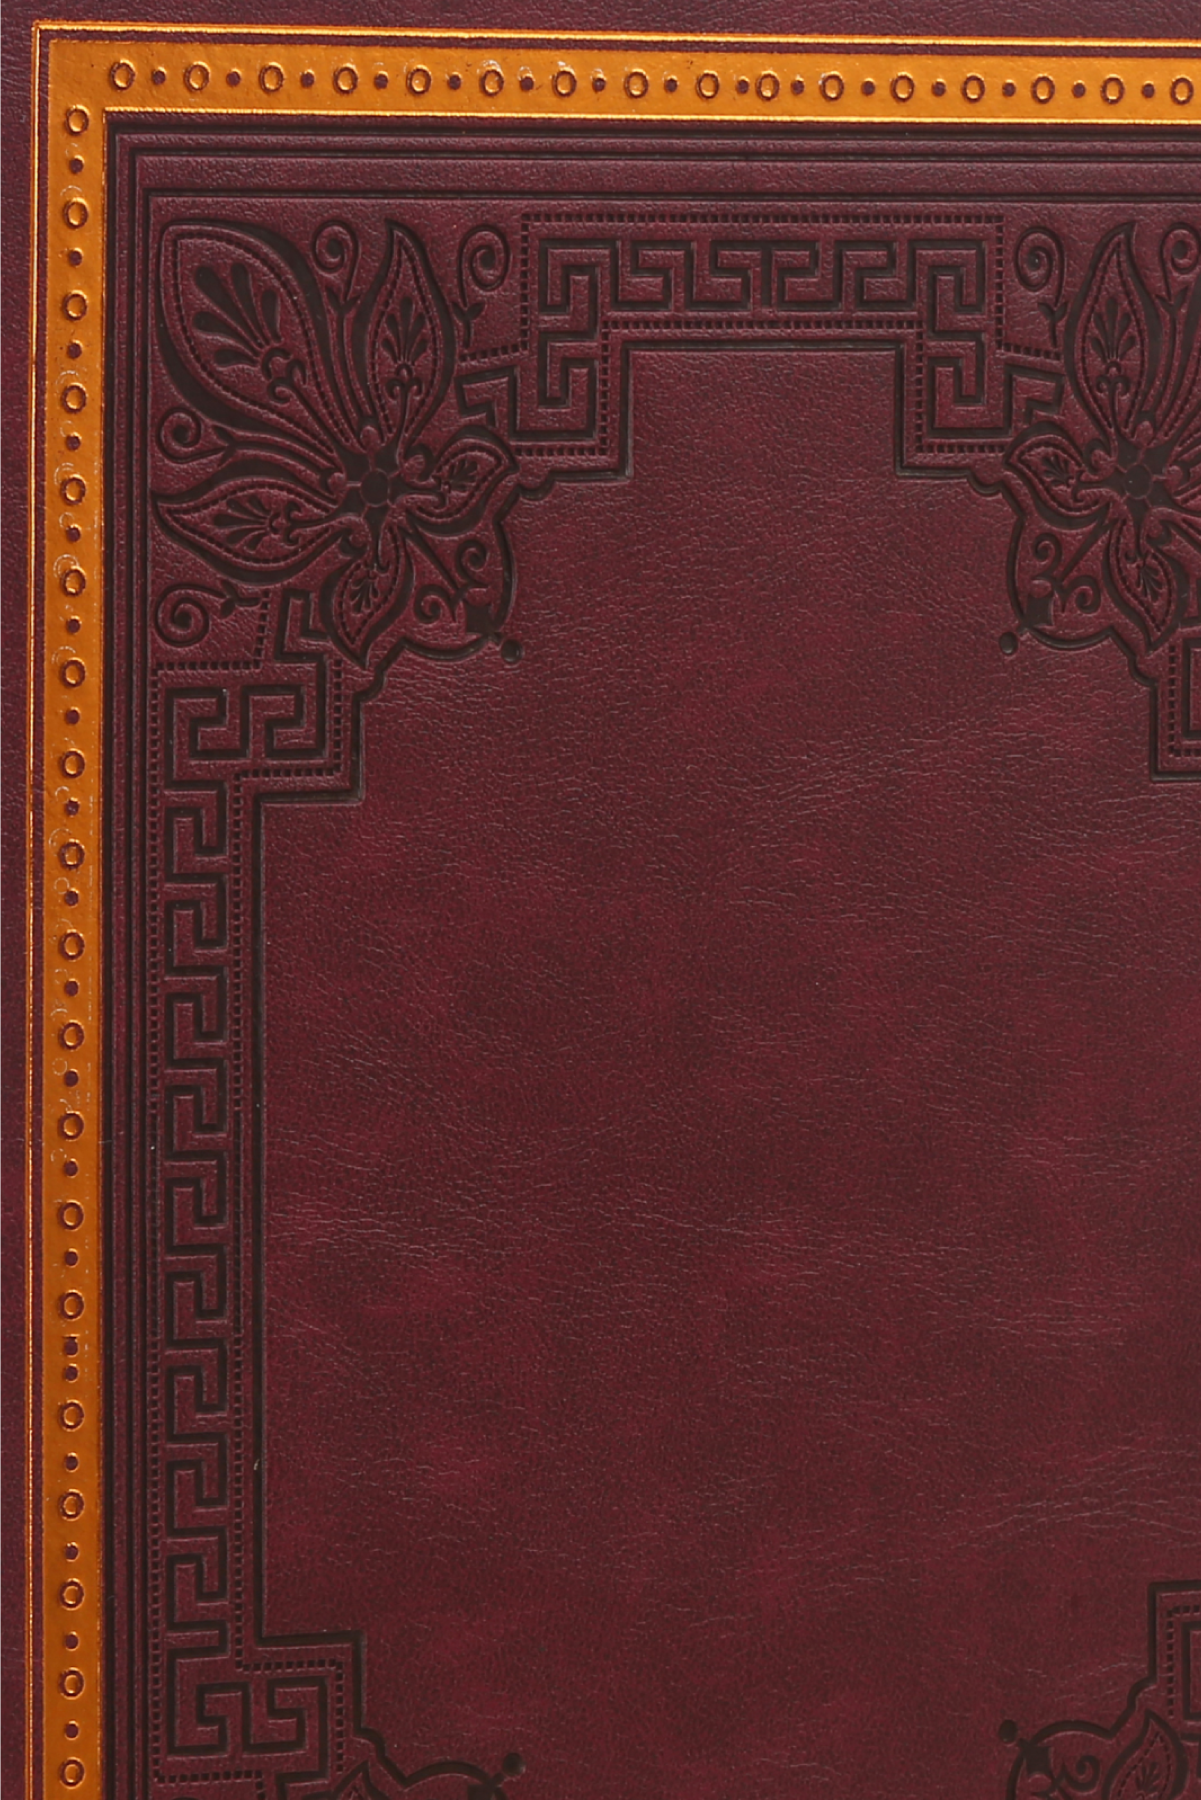 Sketchbook Antique Style Victoria's Journals (Burgundy)